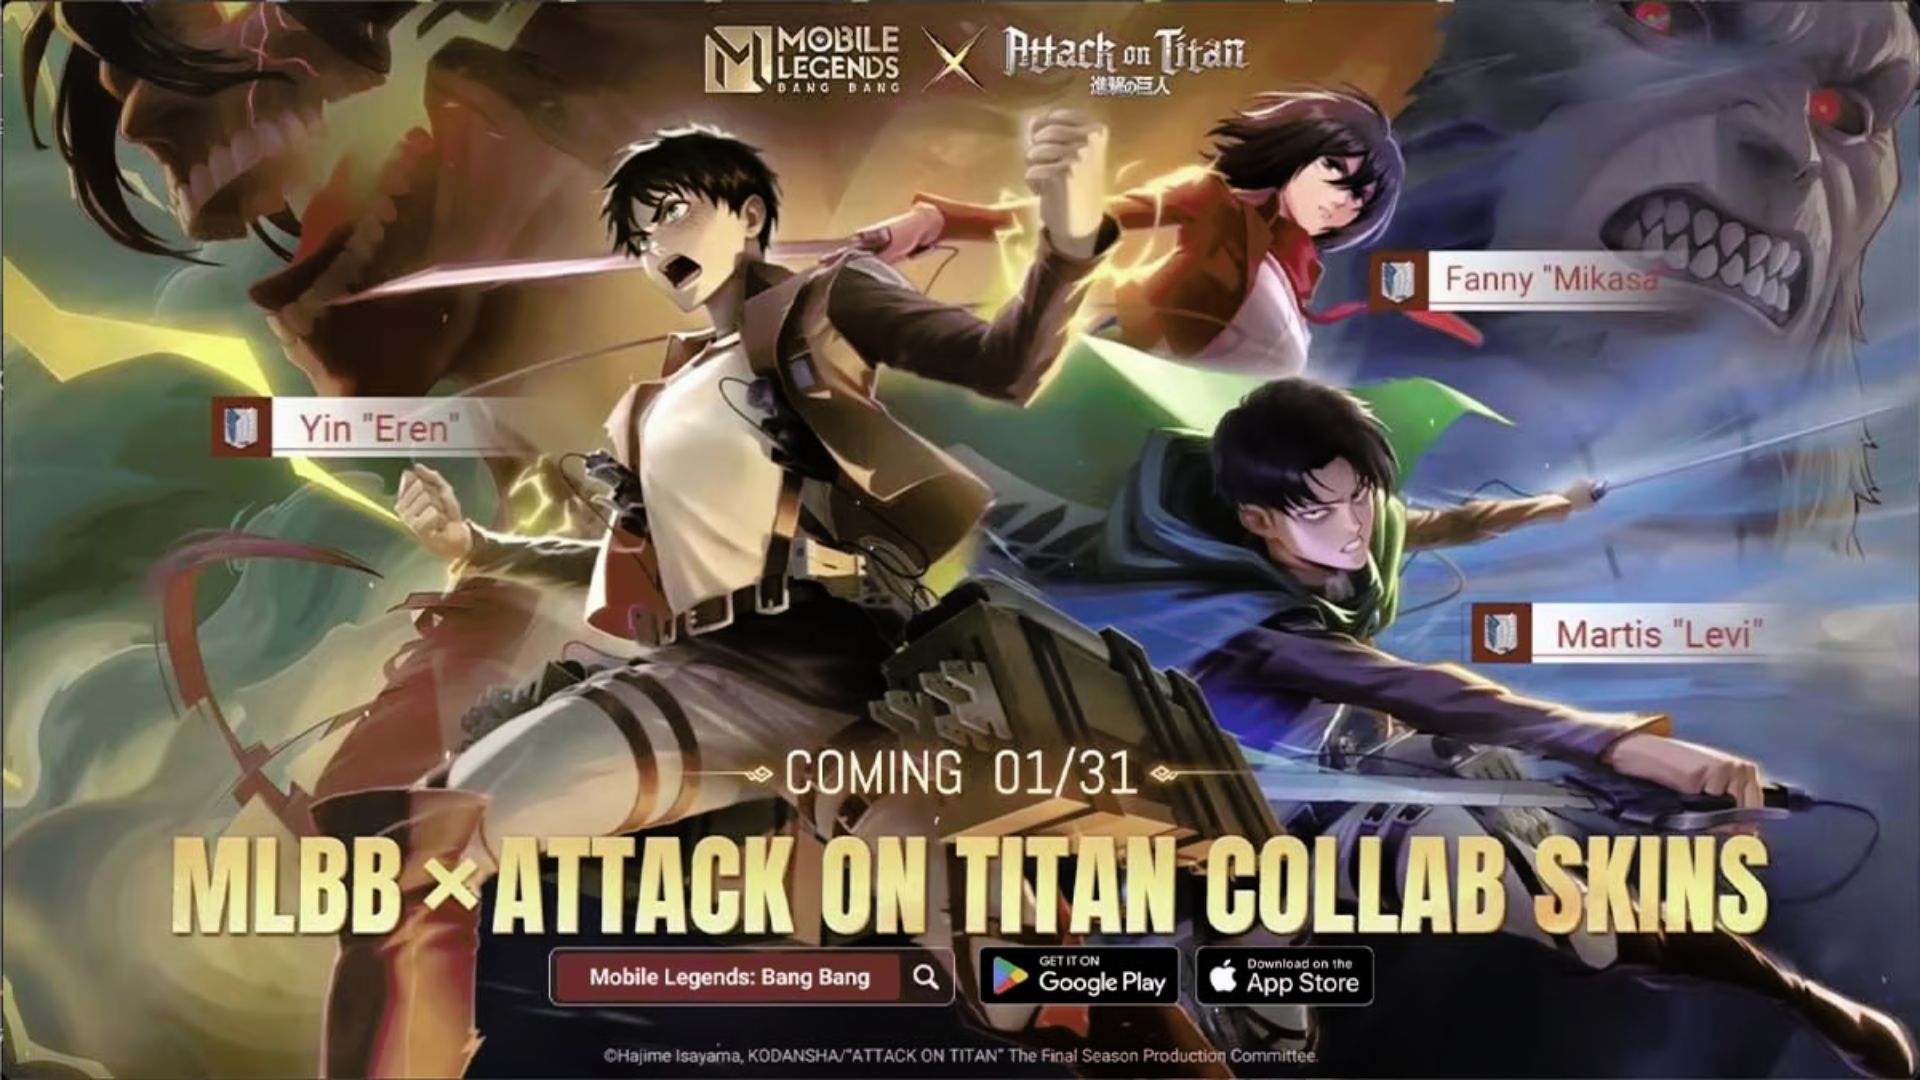 Kolaborasi Skin Attack on Titan x Mobile Legends, Gimana Cara Dapatnya?